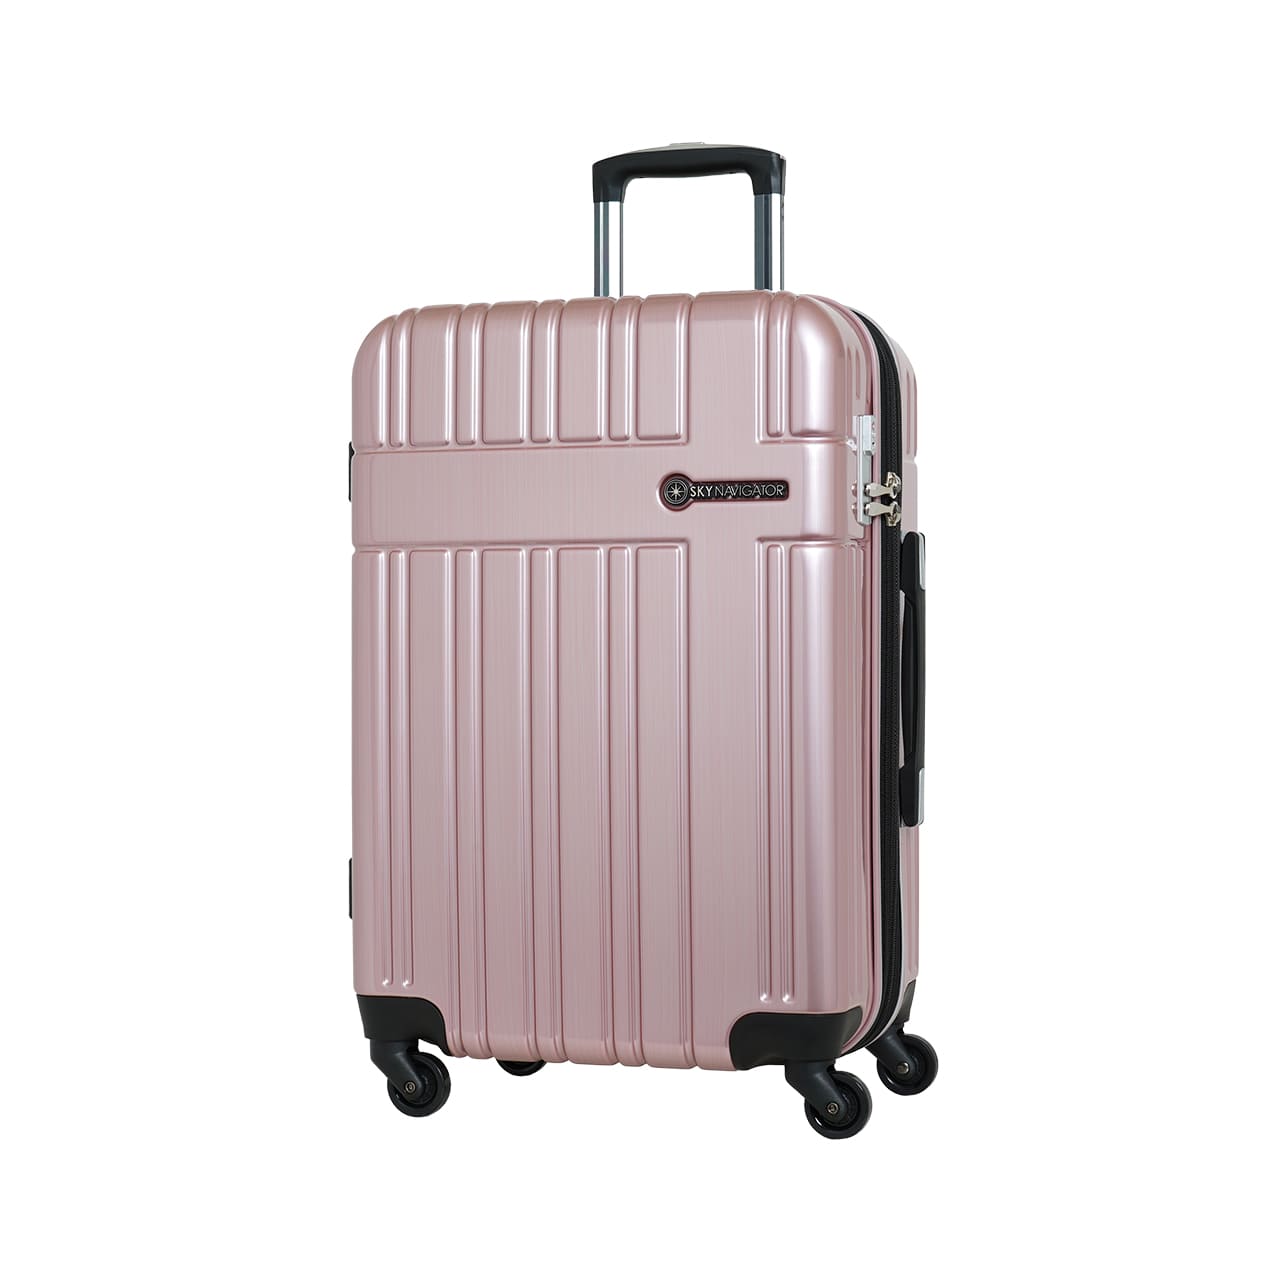 SKYNAVIGATORのスーツケースSK-0835-56のピンクヘアラインの正面振り画像